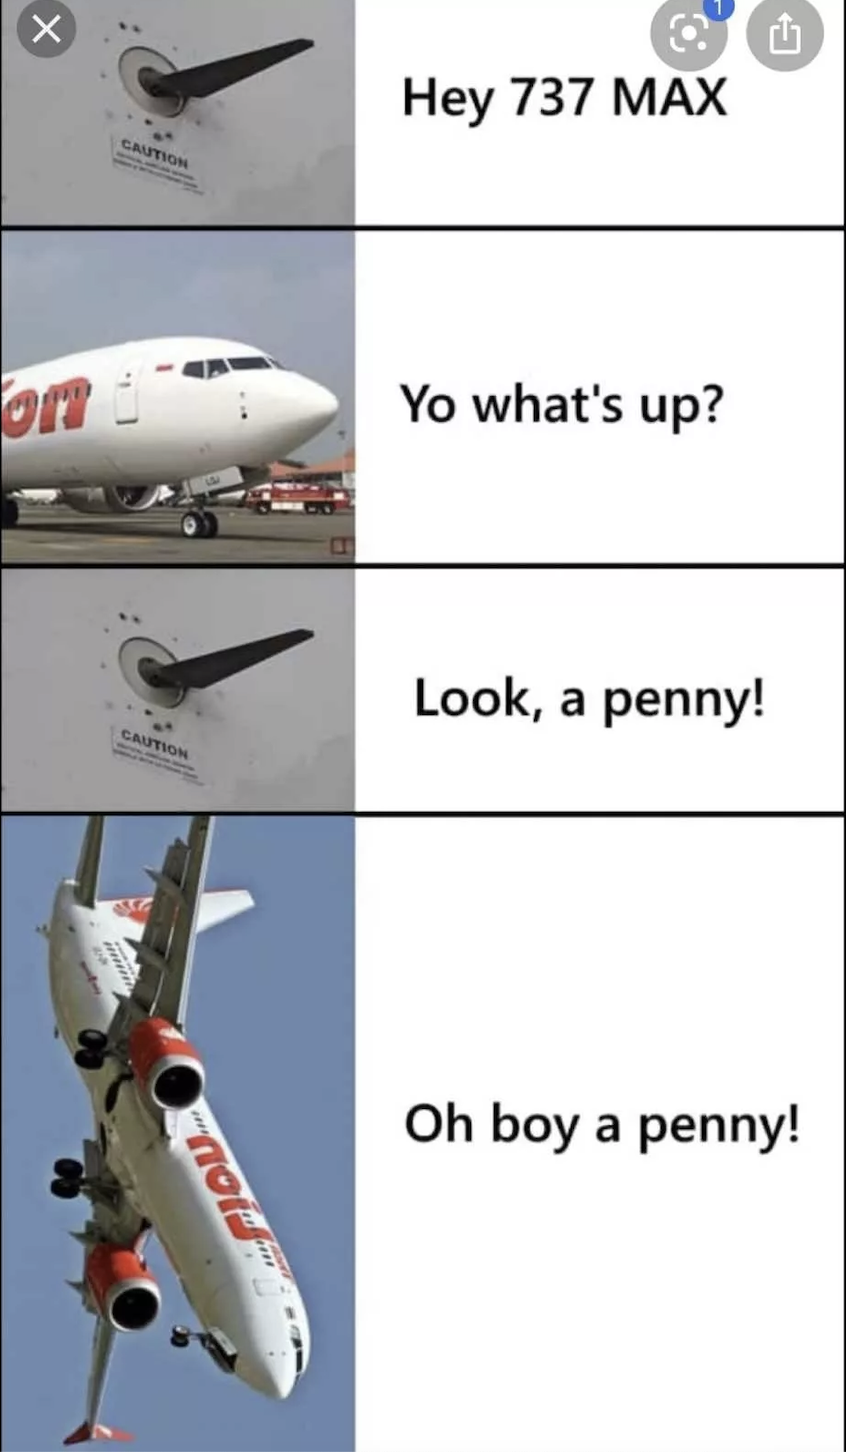 max 737 memes - on Santos Sautinn Fiou Hey 737 Max Yo what's up? Look, a penny! Oh boy a penny!